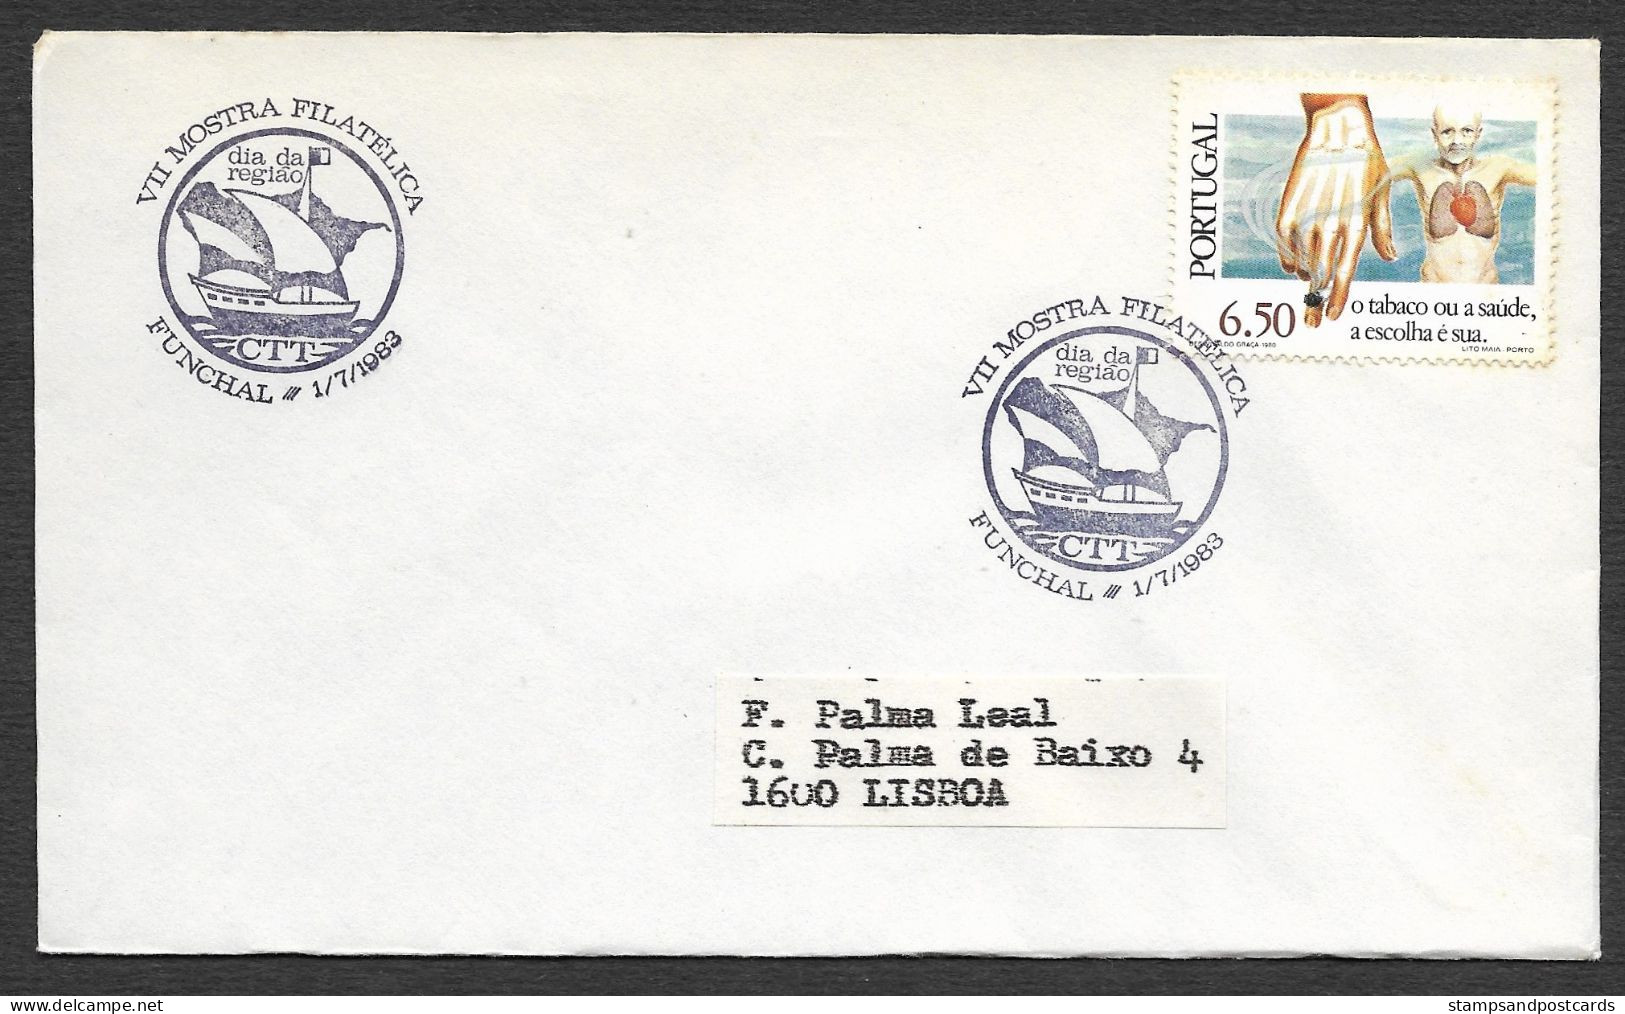 Portugal Cachet Commémoratif Journée De La Region Madère Funchal 1983 Event Postmark Stamp Madeira Region Day - Maschinenstempel (Werbestempel)